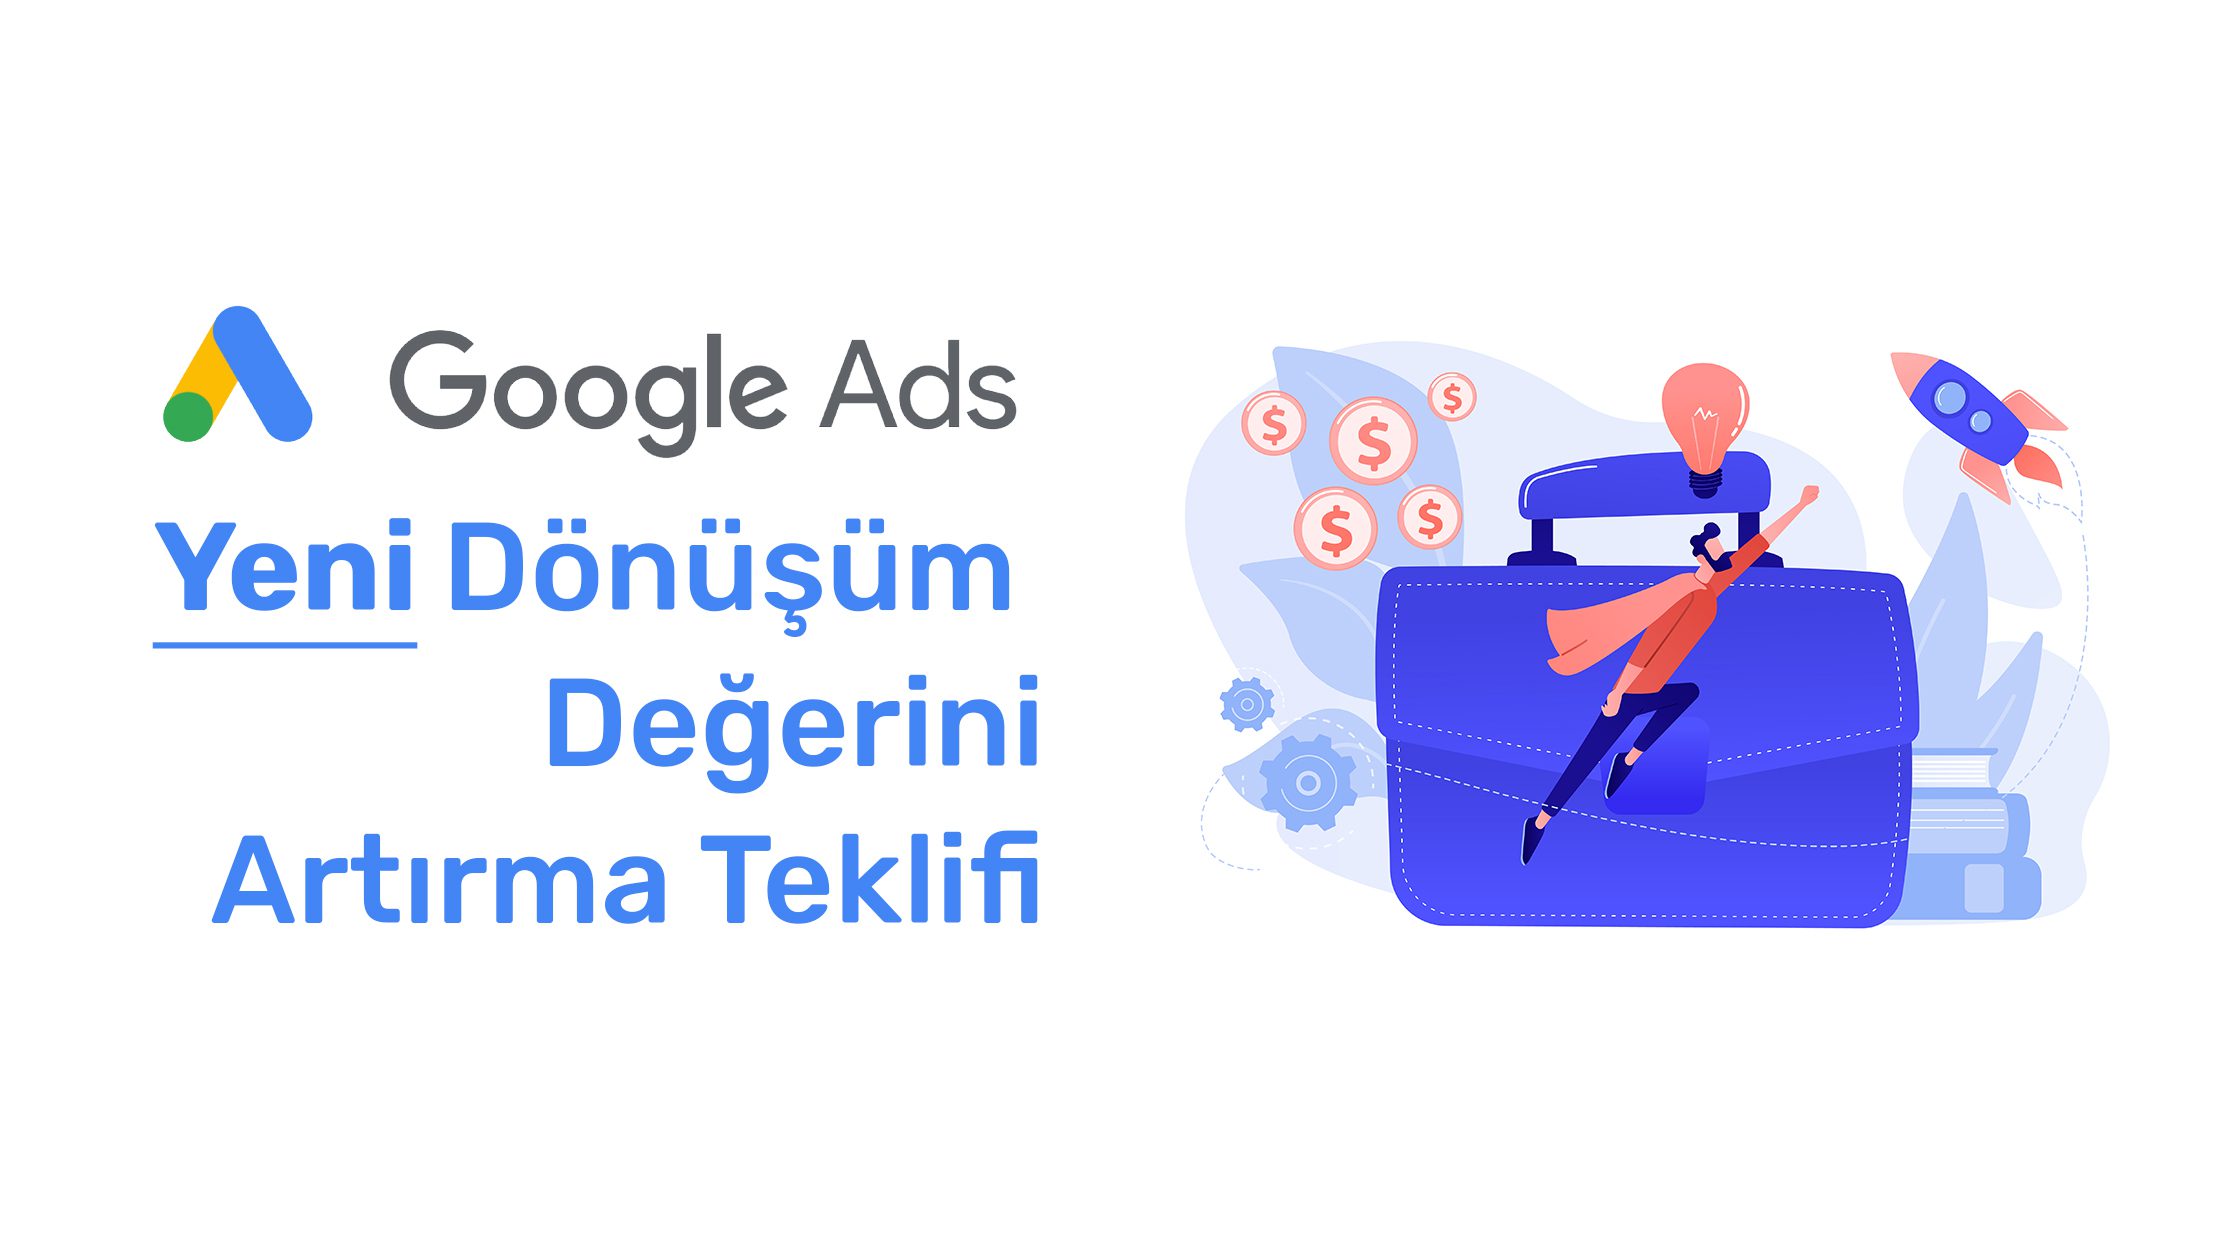 google ads donusum degerini arttirma